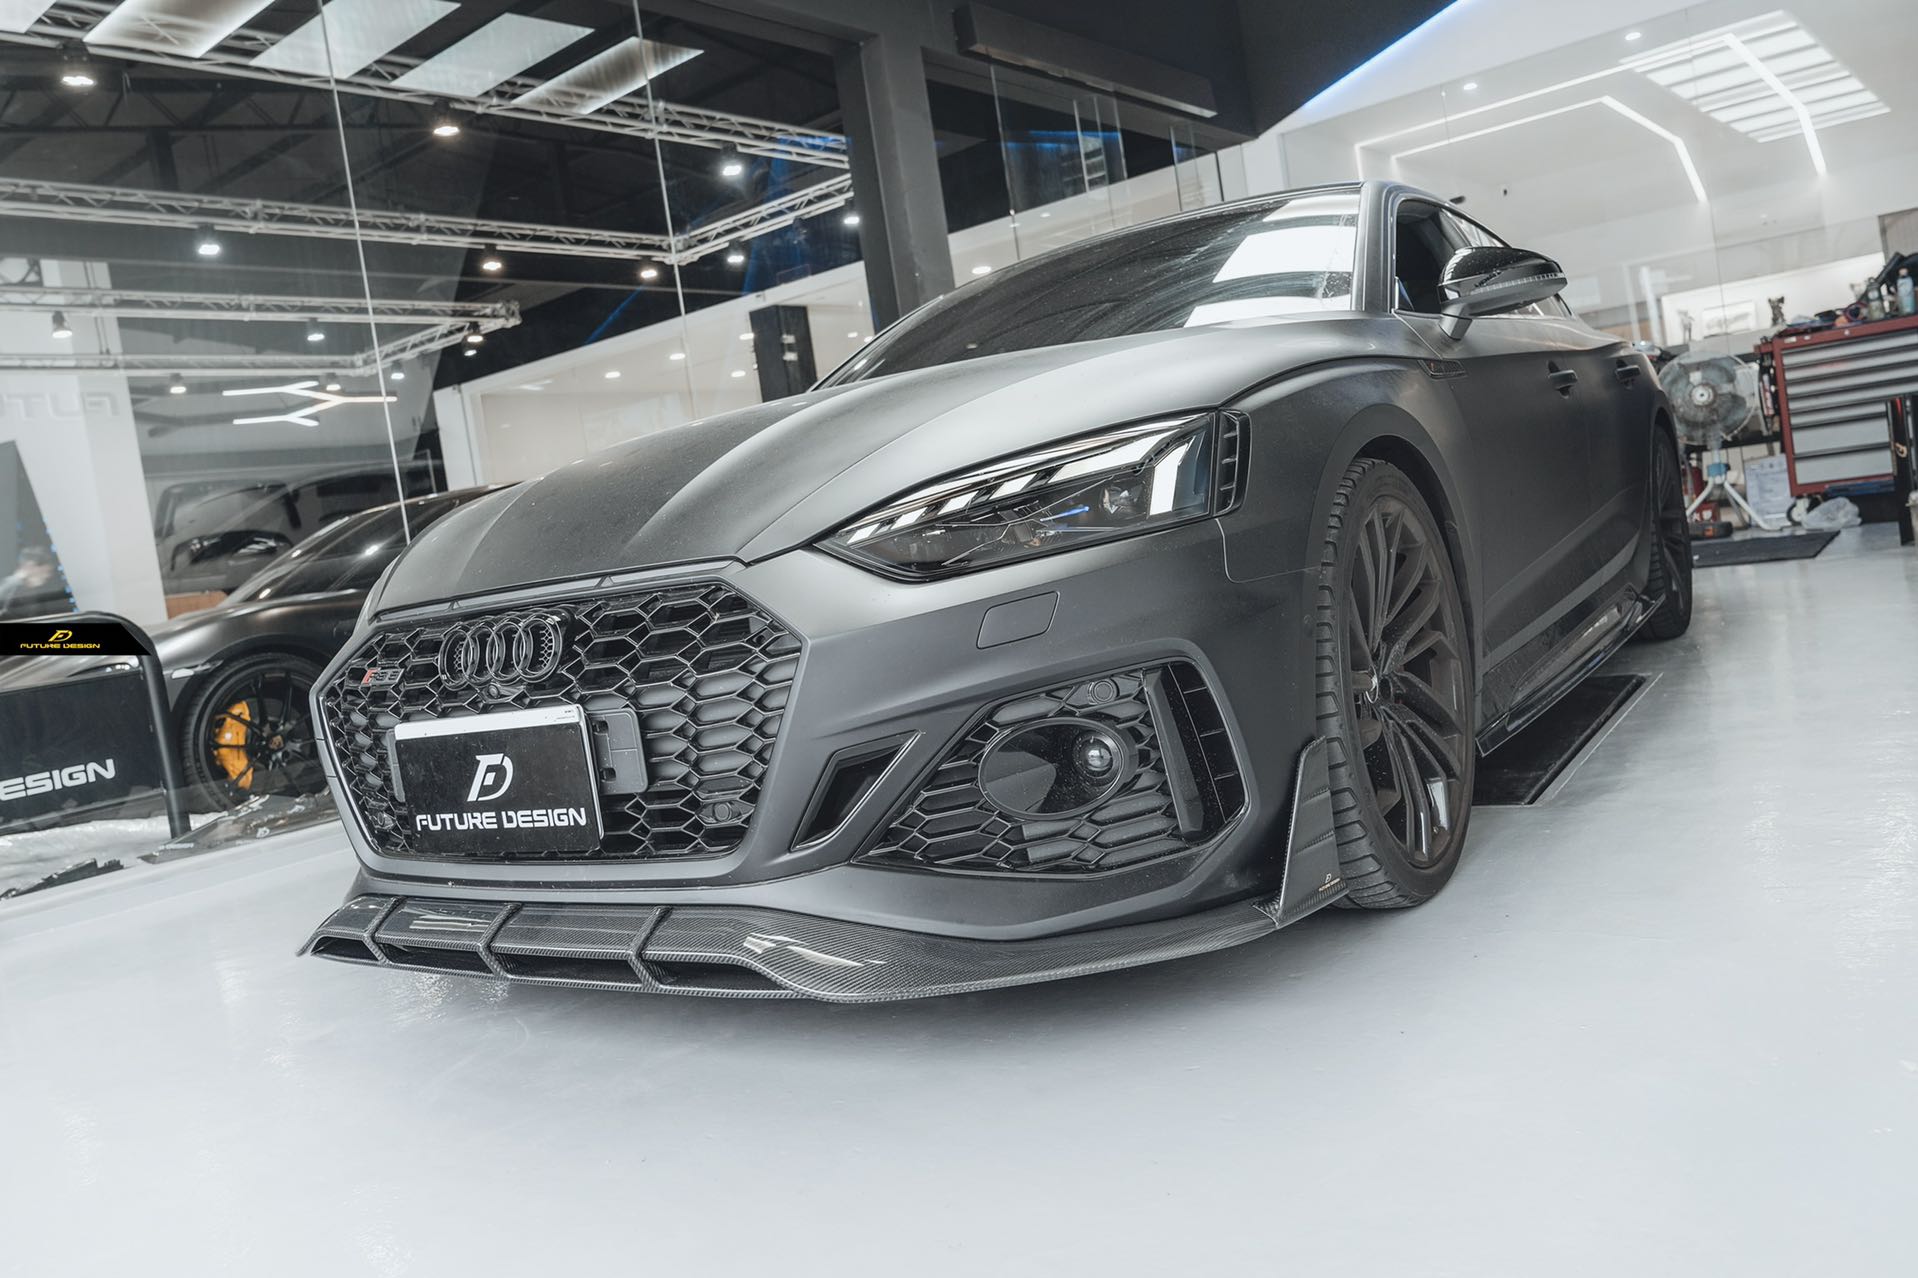 Future Design Carbon Fiber FRONT GRILL SIDE OVERLAY TRIM - "Blaze kit" for Audi RS5 B9.5 2020-2022